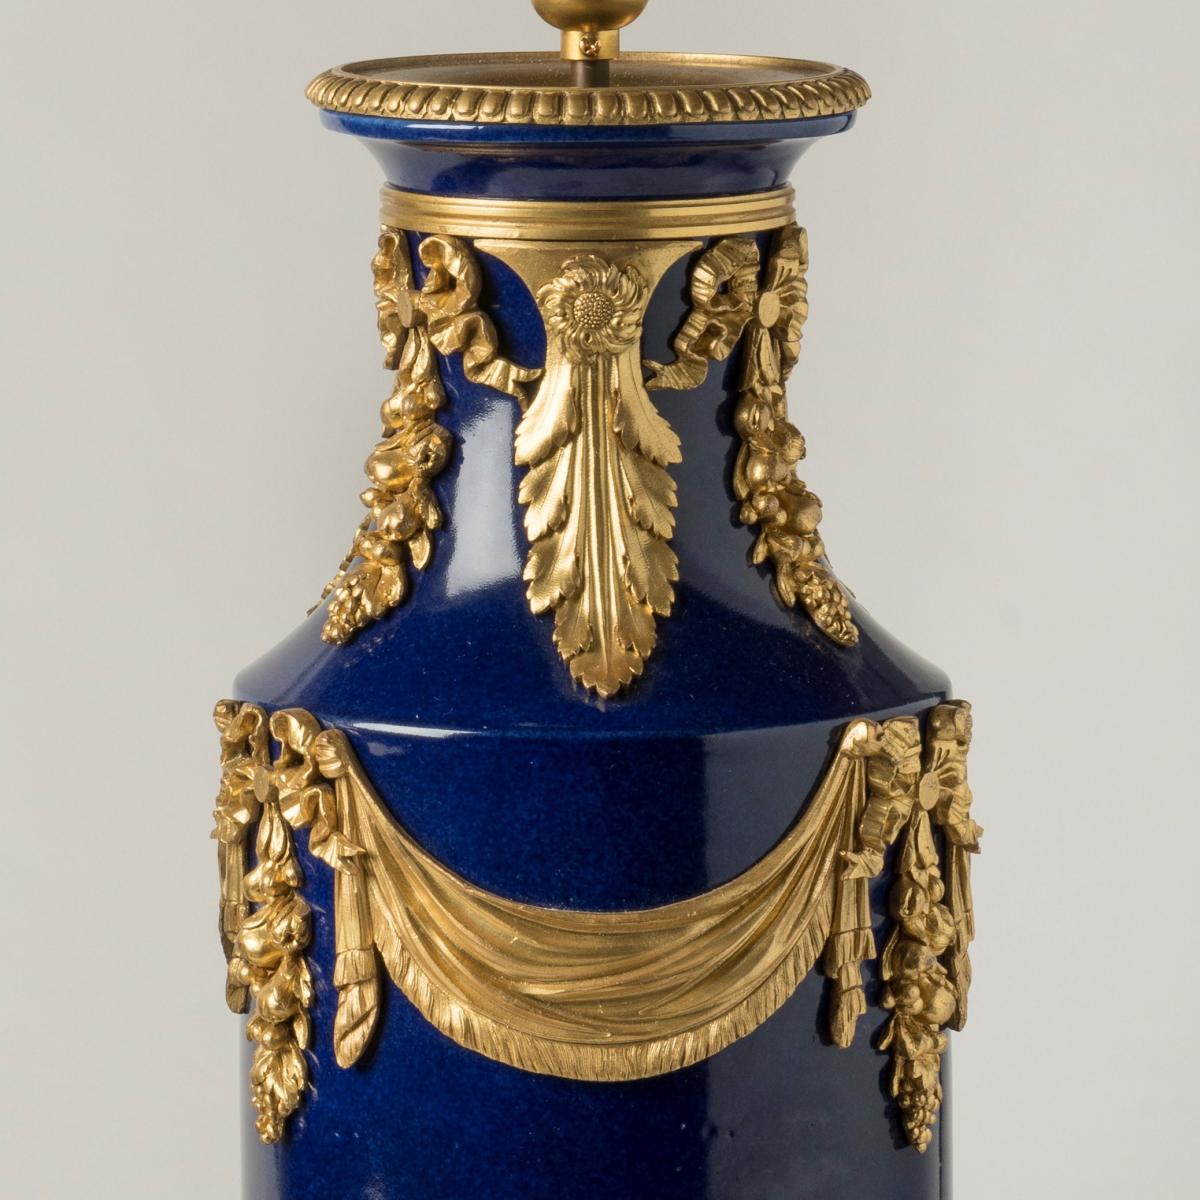 Ormolu-Mounted Blue Porcelain Lamps